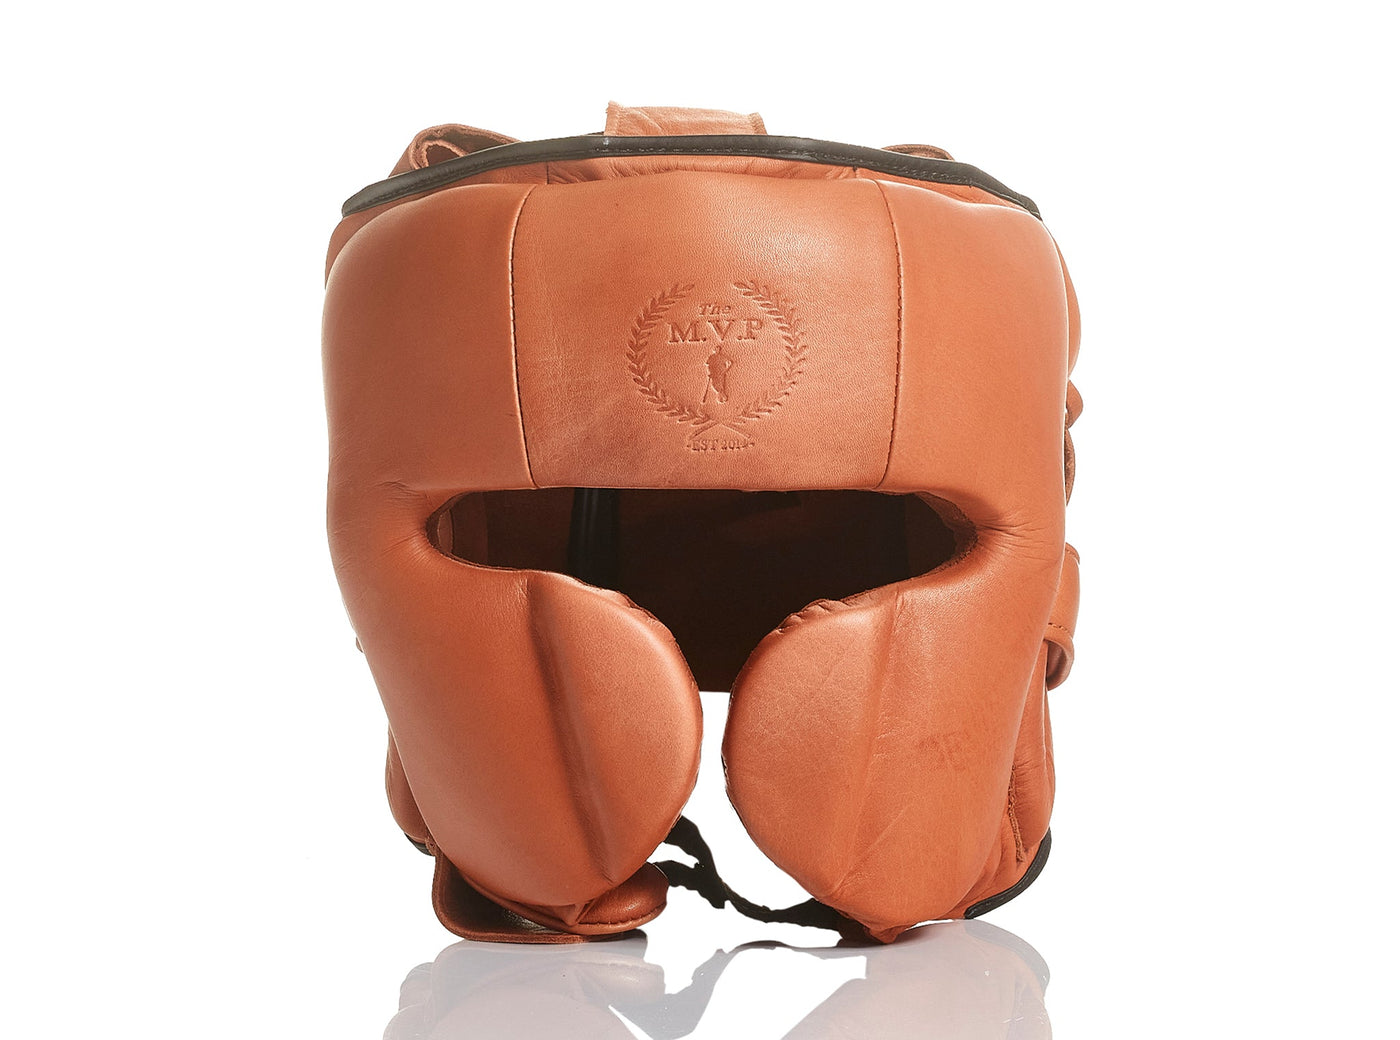 RETRO Deluxe Tan Leather Boxing Headgear - MODEST VINTAGE PLAYER LTD